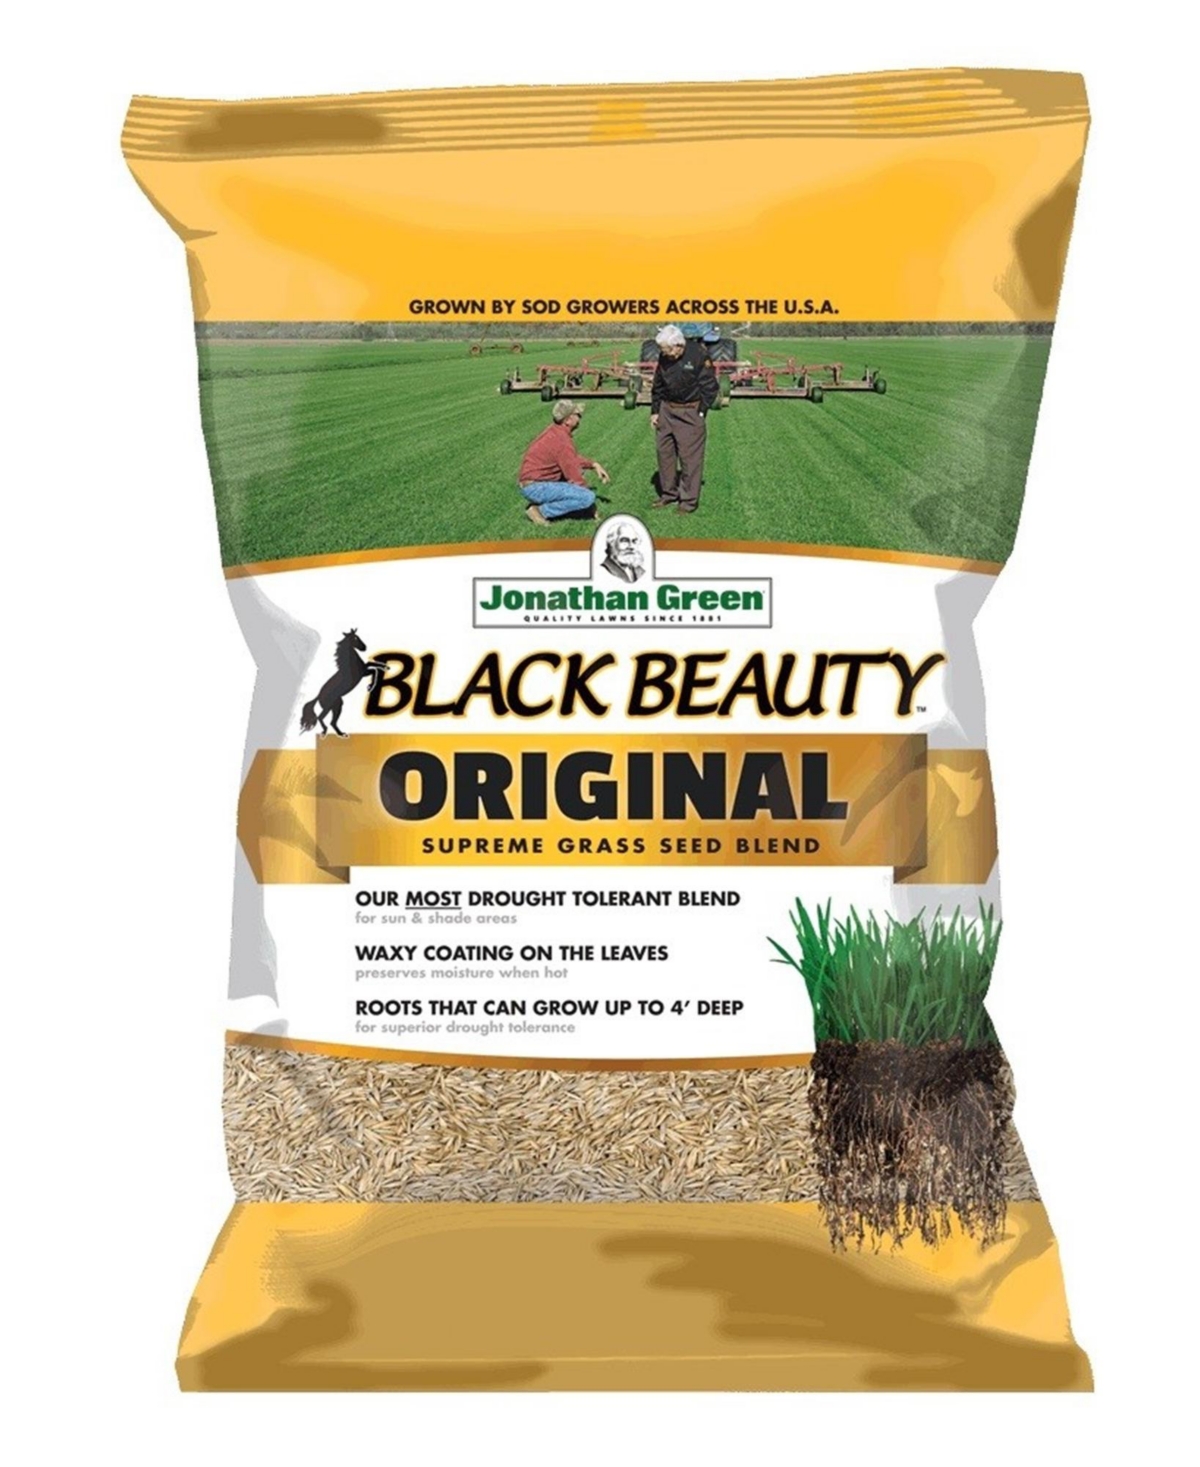 (#10318) Black Beauty Original Grass Seed, 5 lb bag - Brown